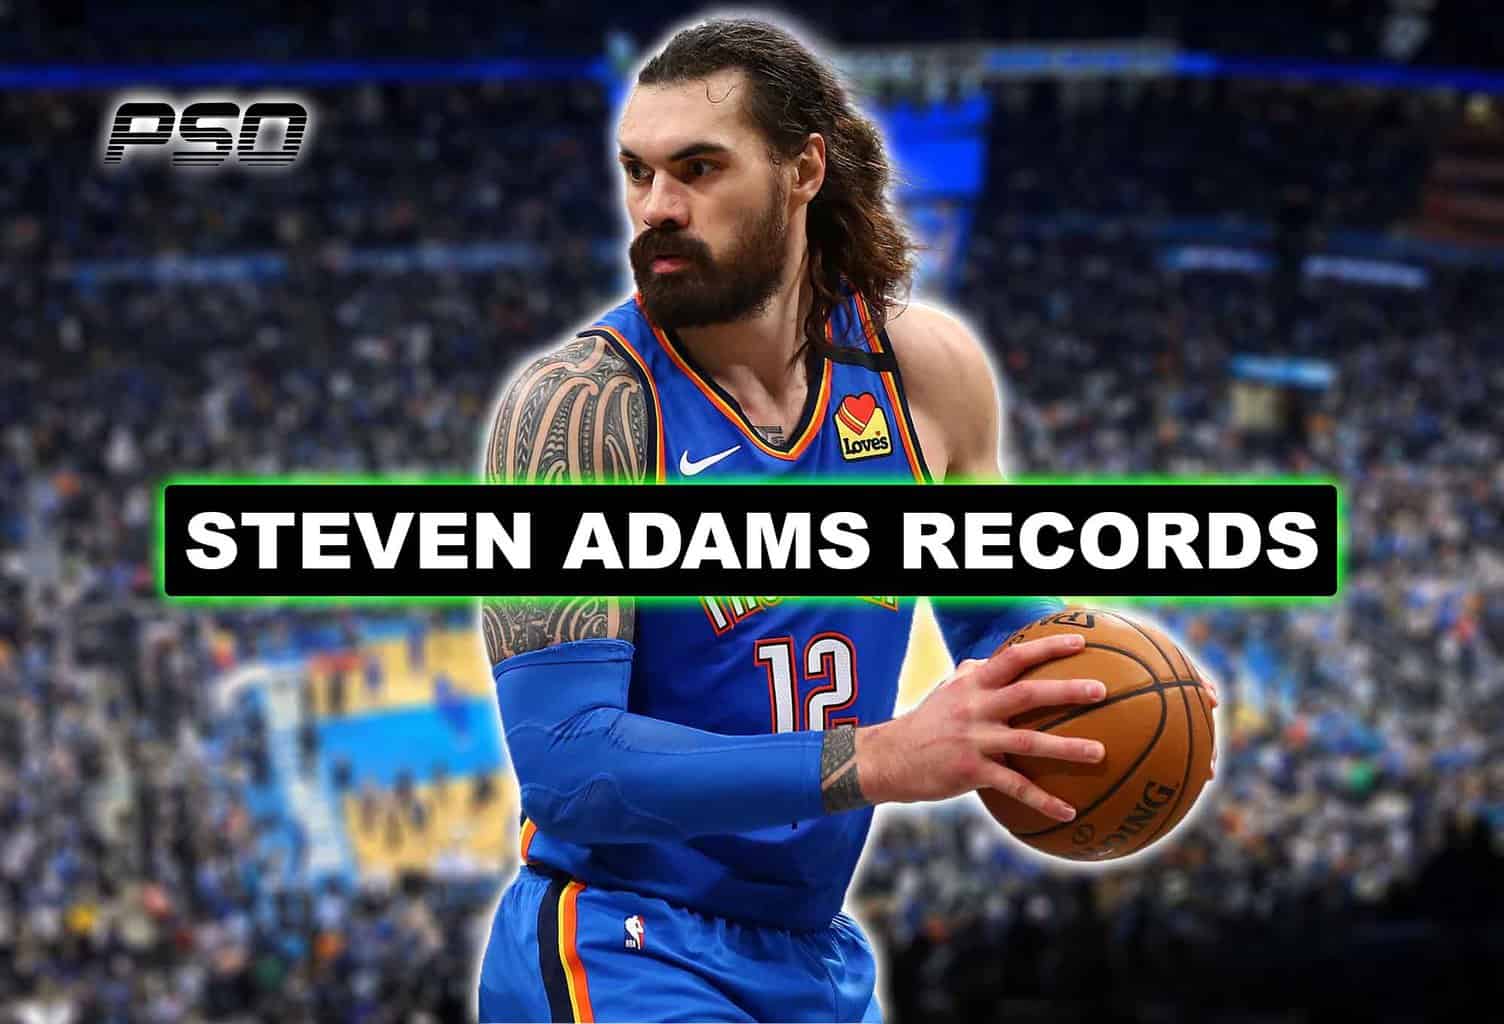 Basketball: Kiwi Steven Adams stars in Memphis Grizzlies' upset